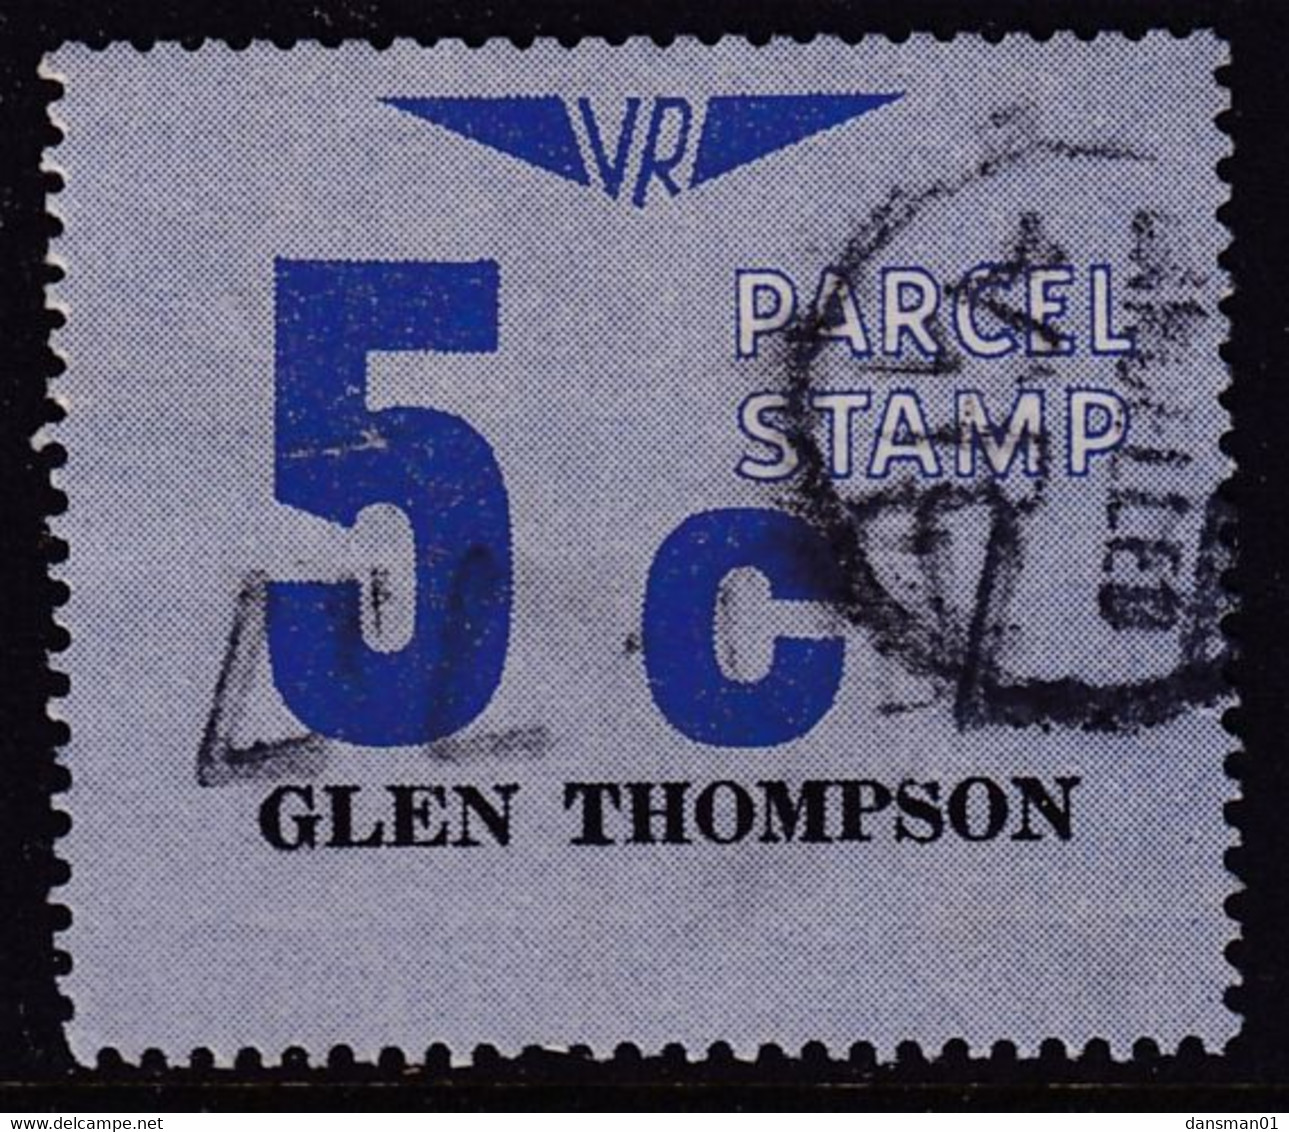 Victoria 1966 Railway Parcel Stamp 5c GLEN THOMPSON Used - Errors, Freaks & Oddities (EFO)